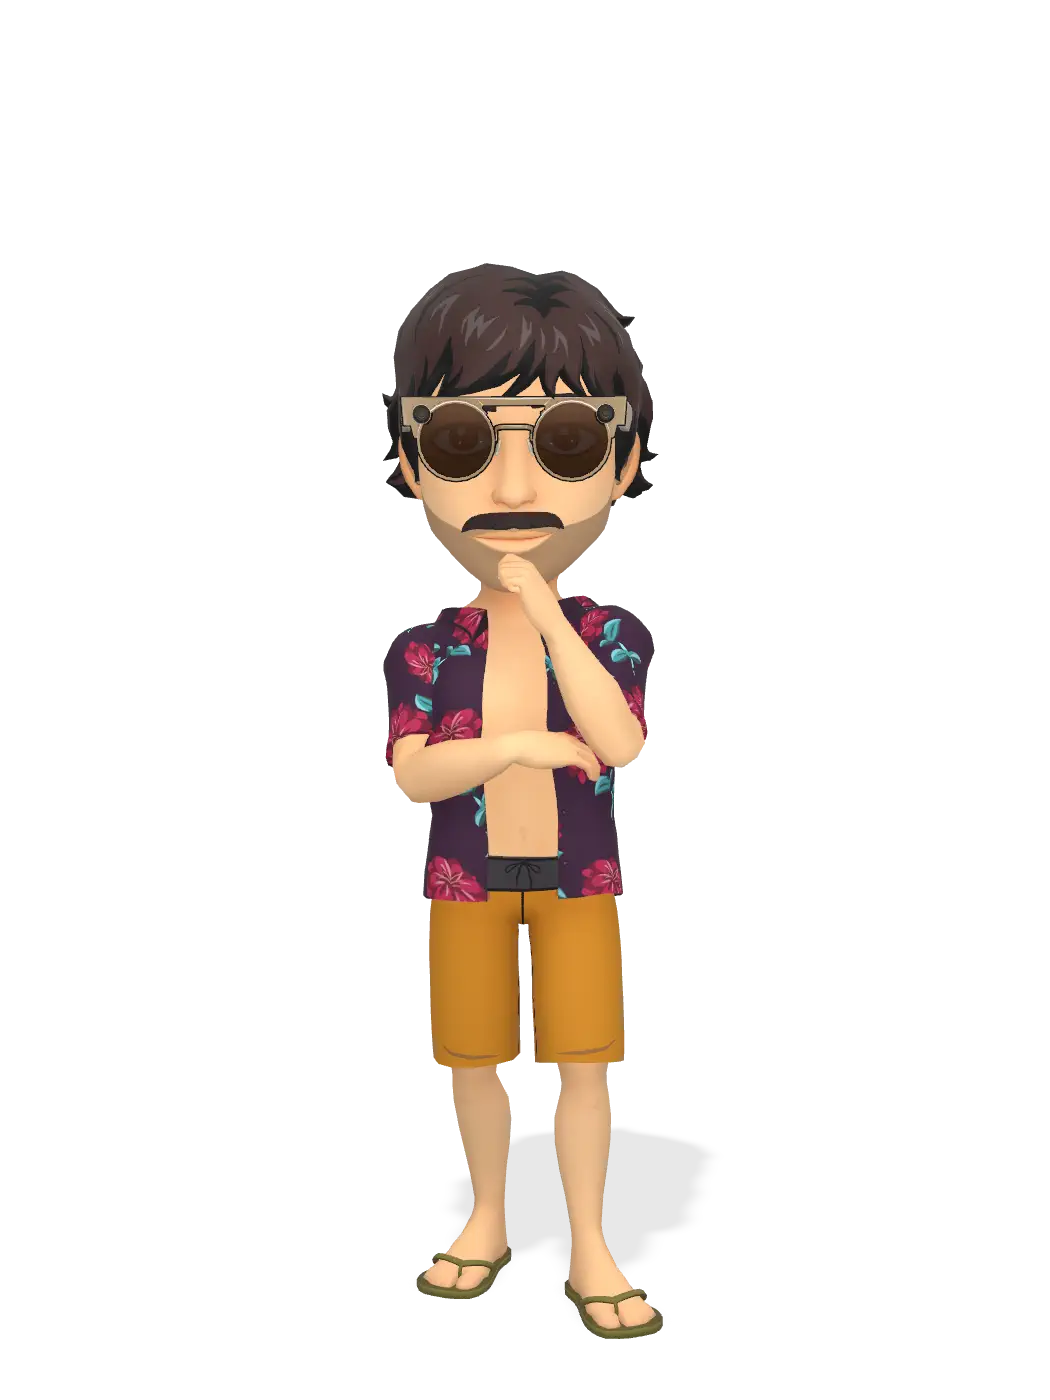 3D Bitmoji for musicbyjulian avatar